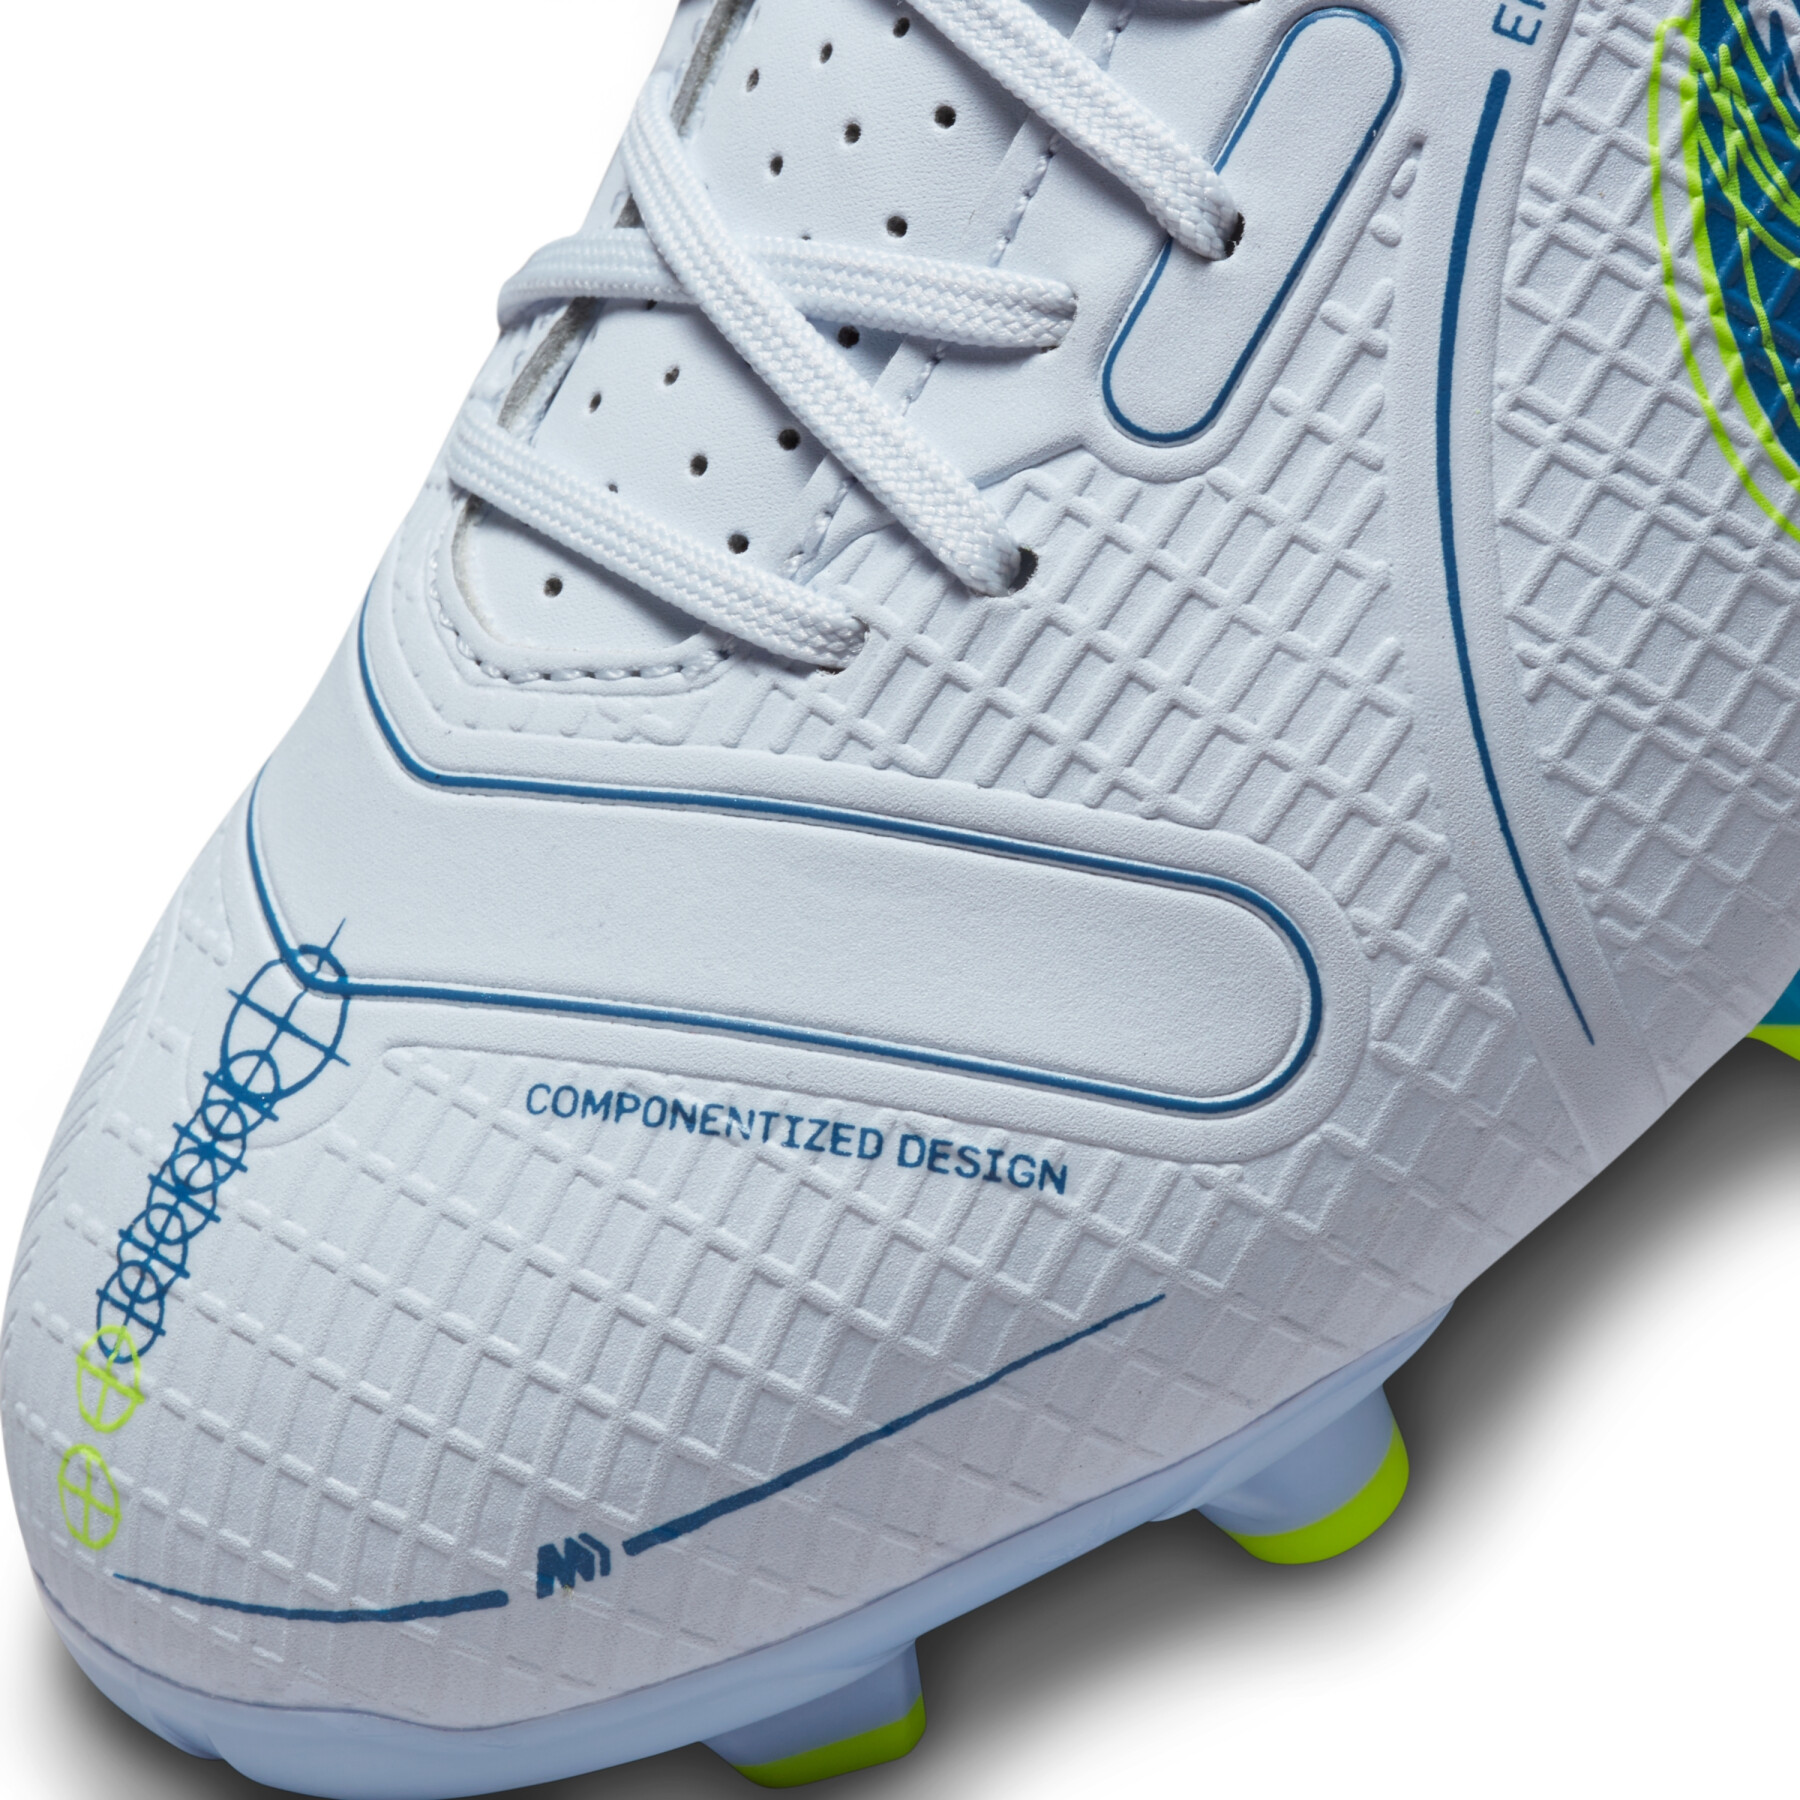 Children's soccer shoes Nike Jr. Mercurial Vapor 14 Academy MG